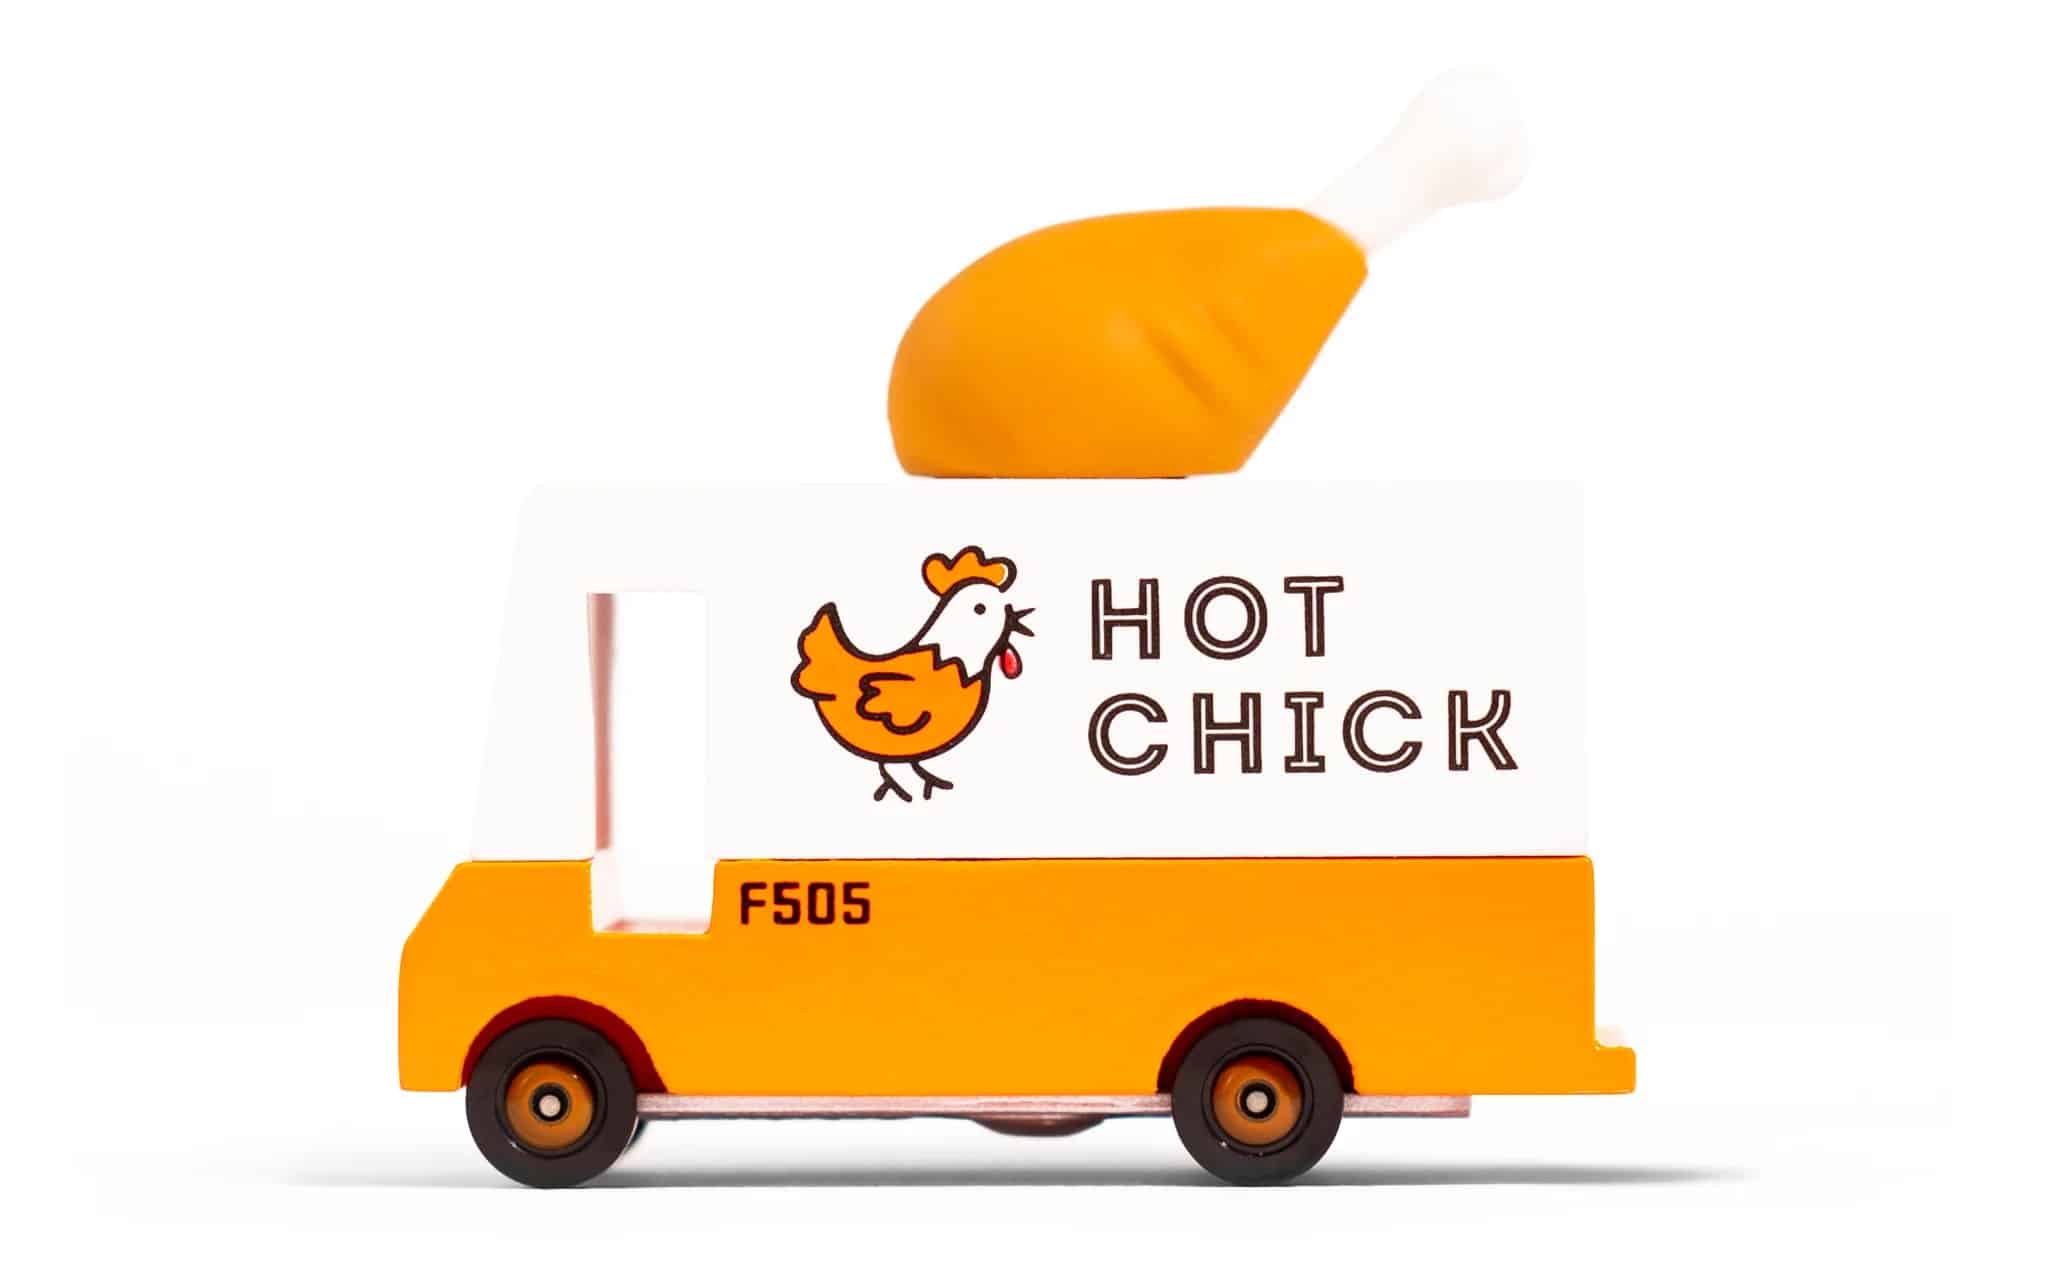 Hot Chick Truck